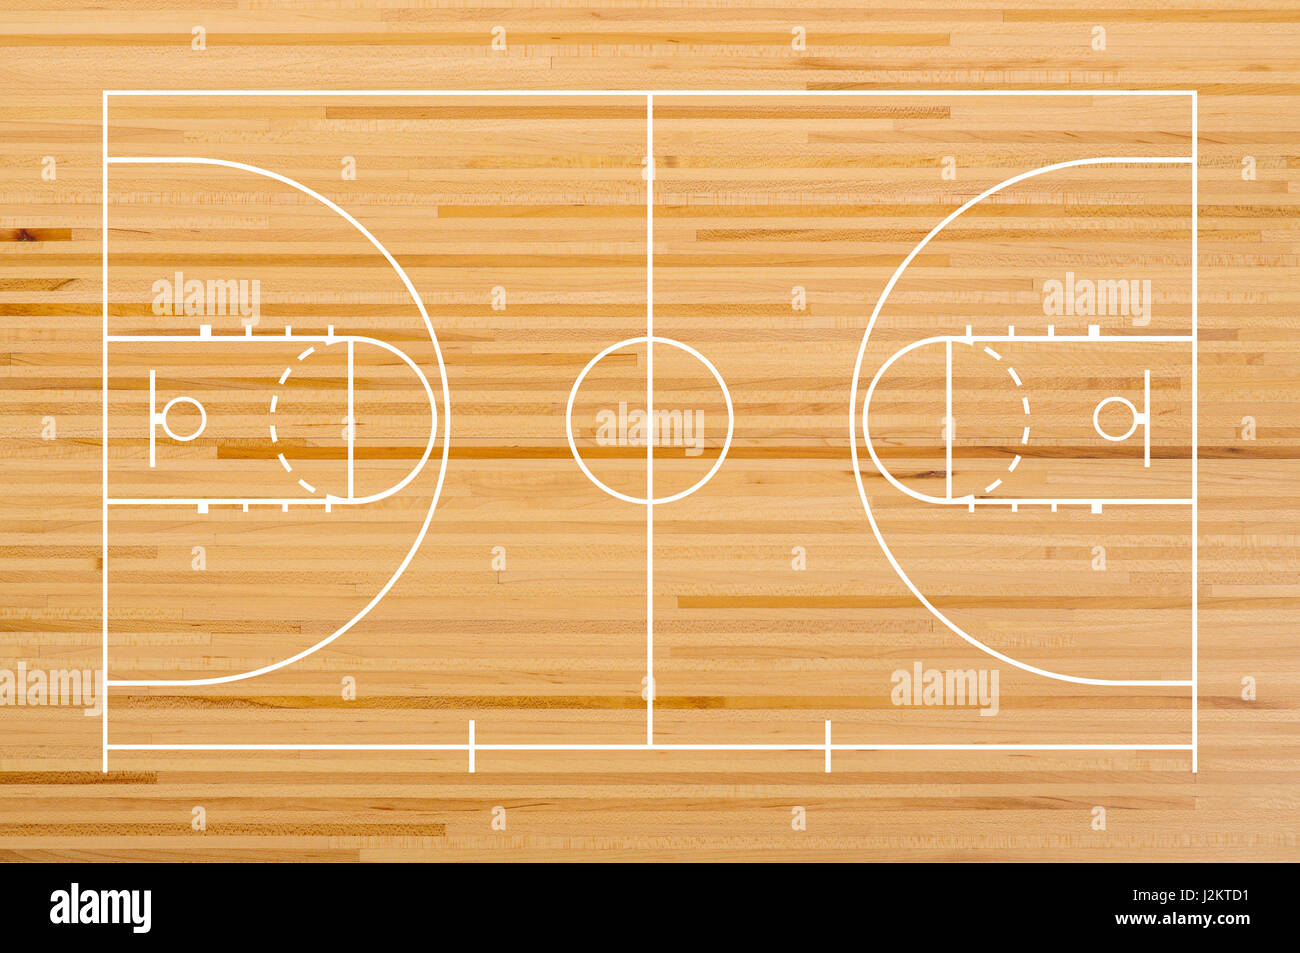 Basketball Court Stock mit Linie auf Holz Stockfoto